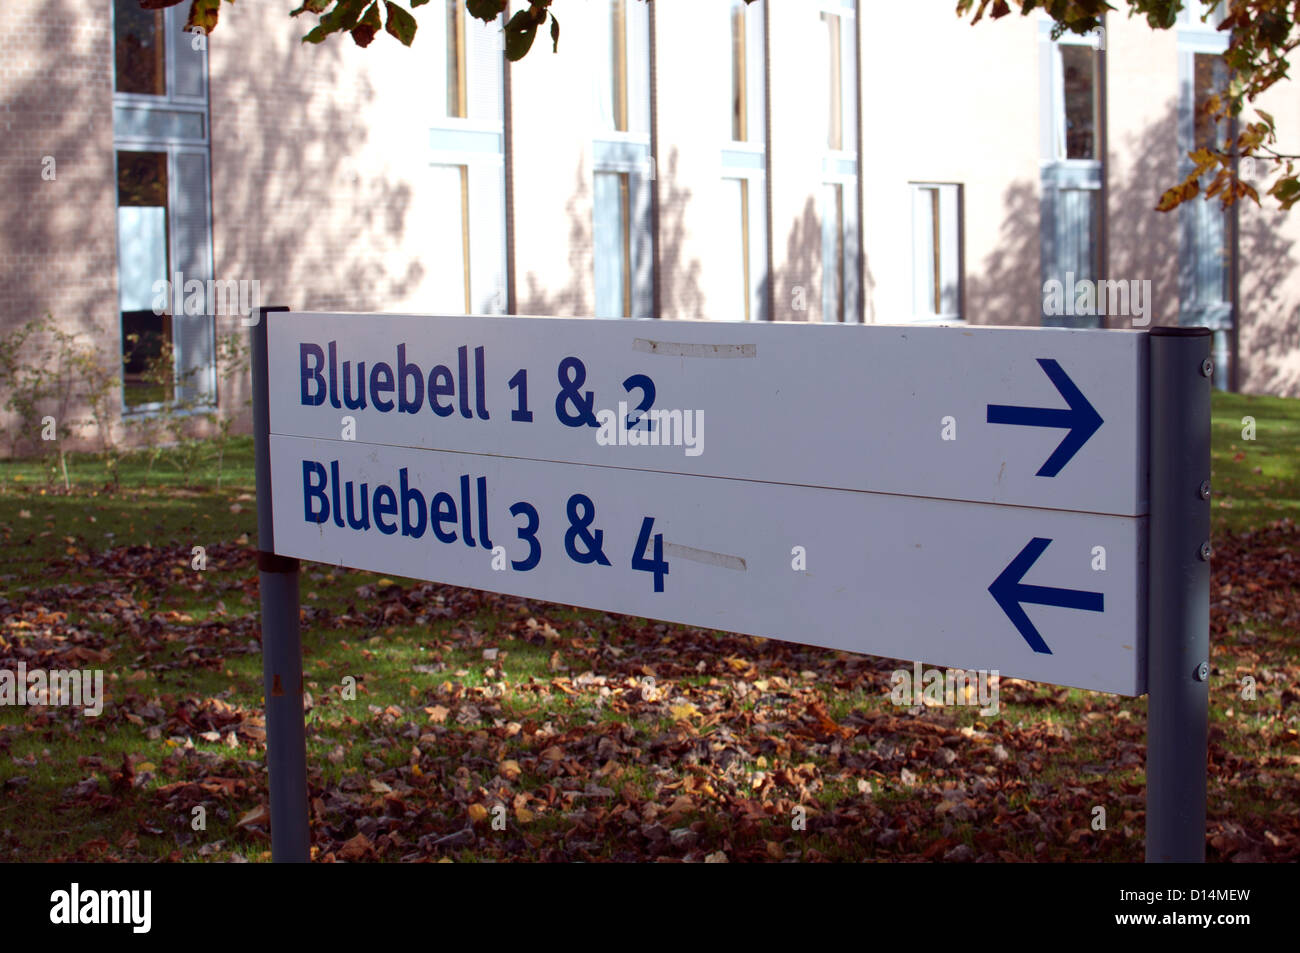 Bluebell halls of residence sign, University of Warwick, UK Stock Photo